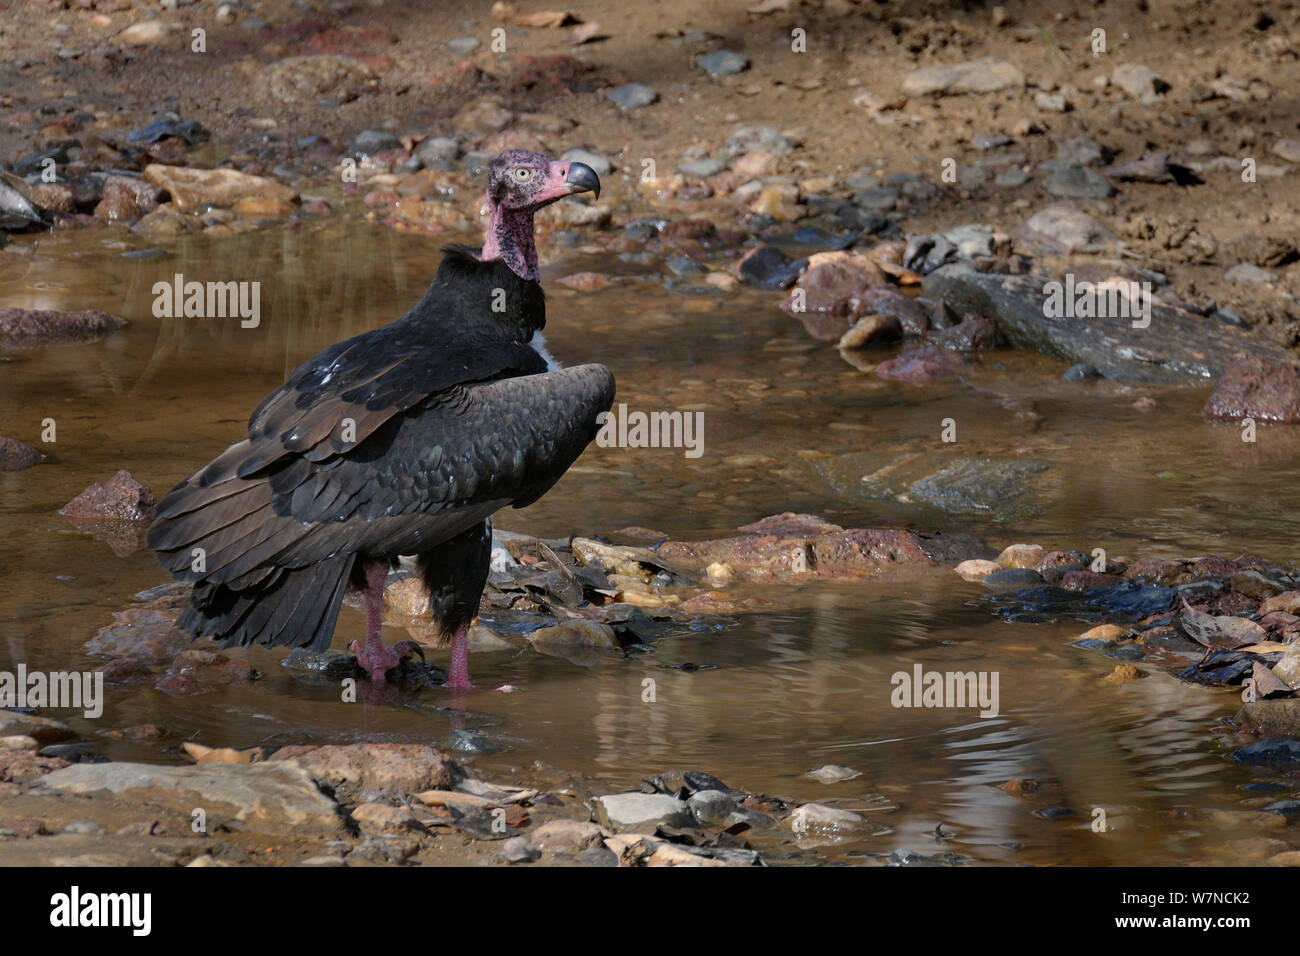 Testa rossa / Asian king vulture (Sarcogyps calvus) nel fiume, Parco Nazionale di Kanha, Madhya Pradesh, India, Marzo Foto Stock